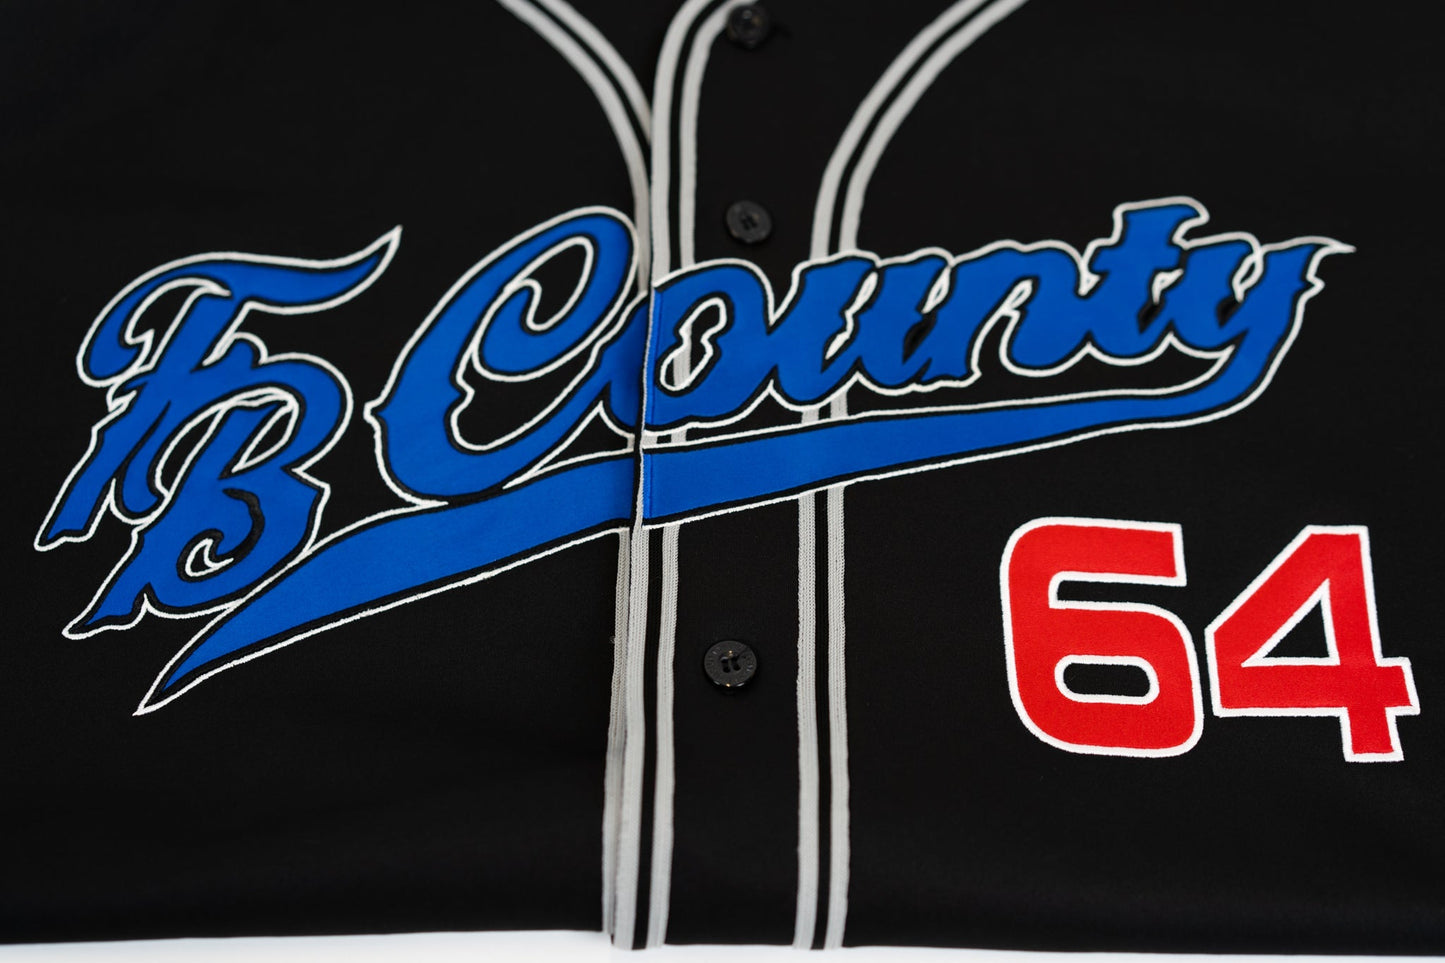 FB County Mens Baseball Classic Signature Jersey